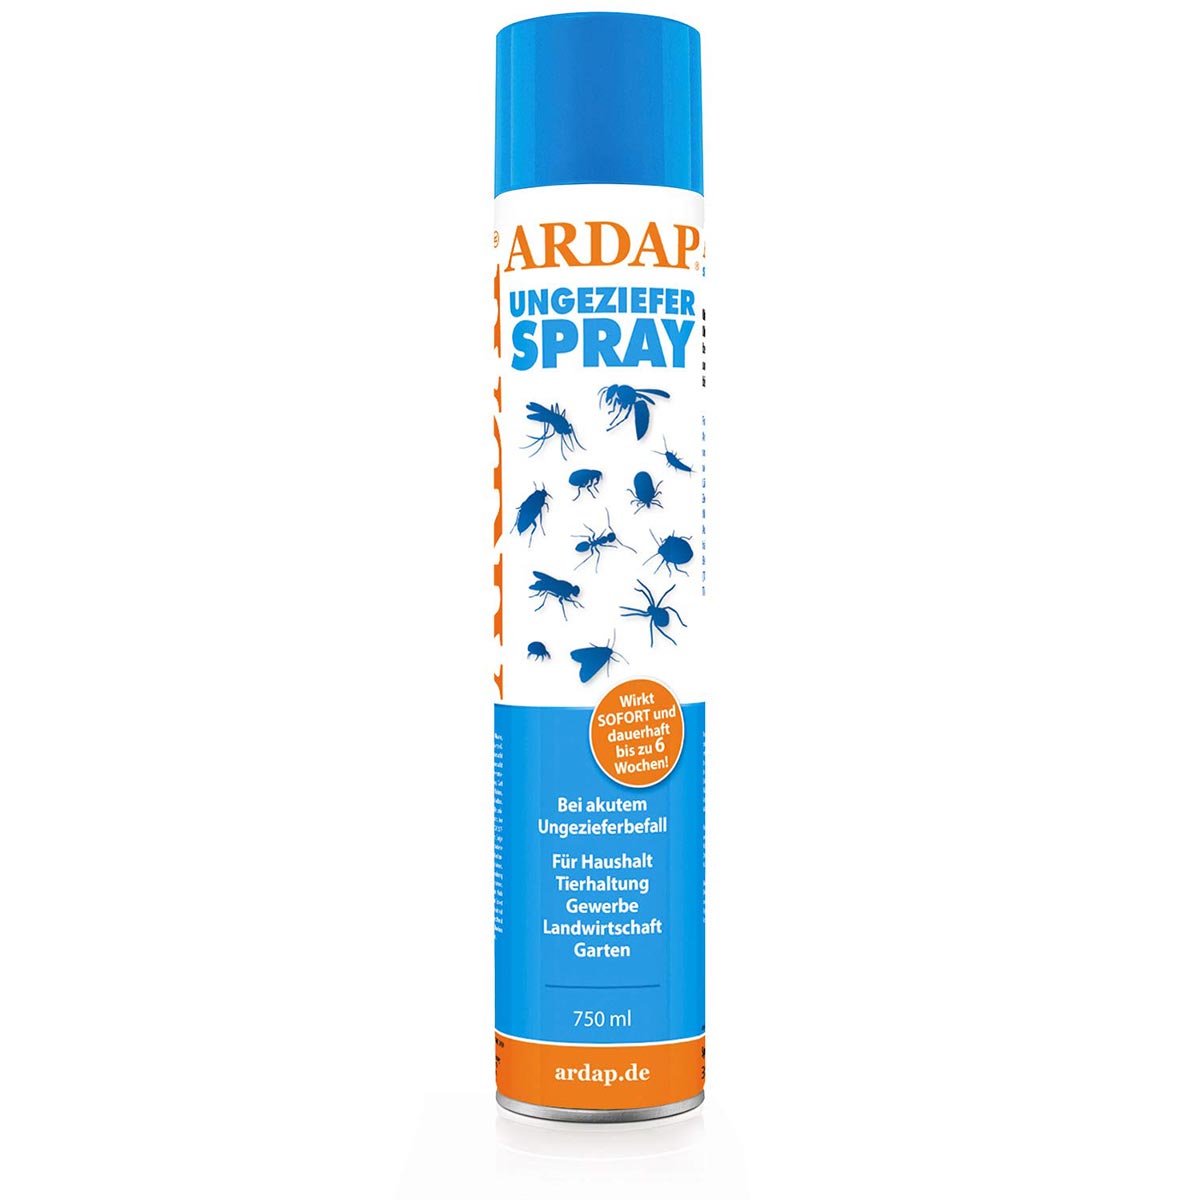 Ardap spray 750 ml - Universal Pest Control